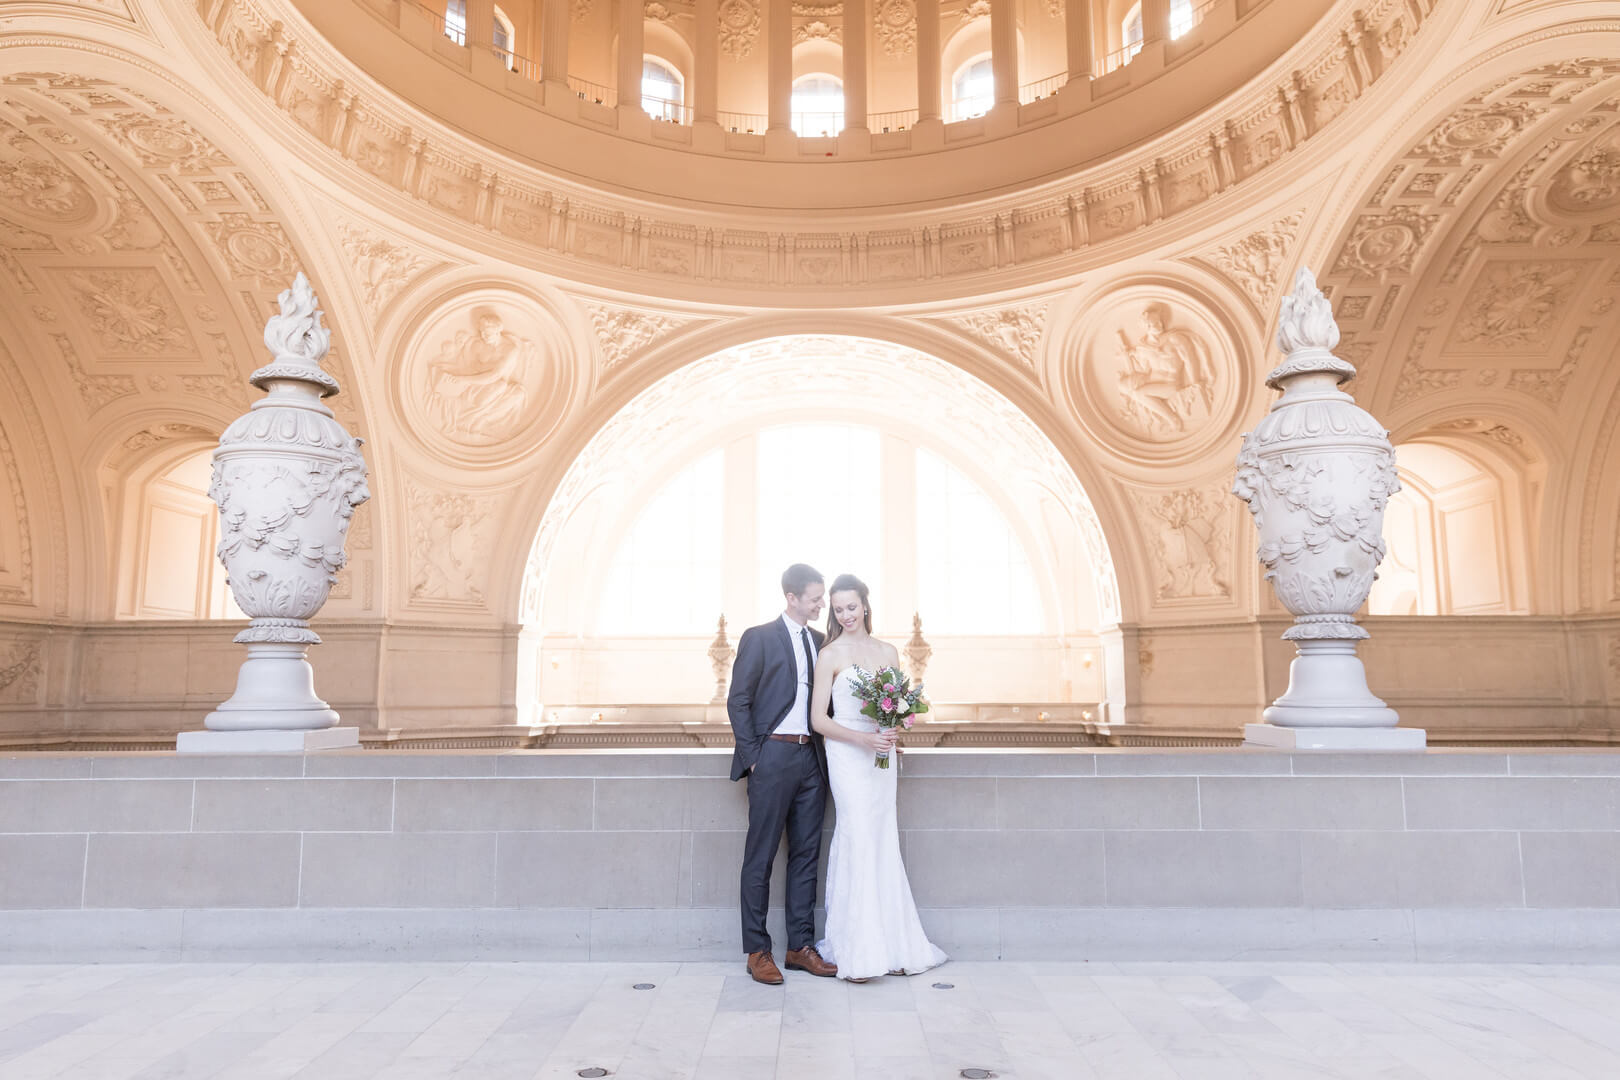 SF City Hall wedding photo fourth floor with Tasha and Seth